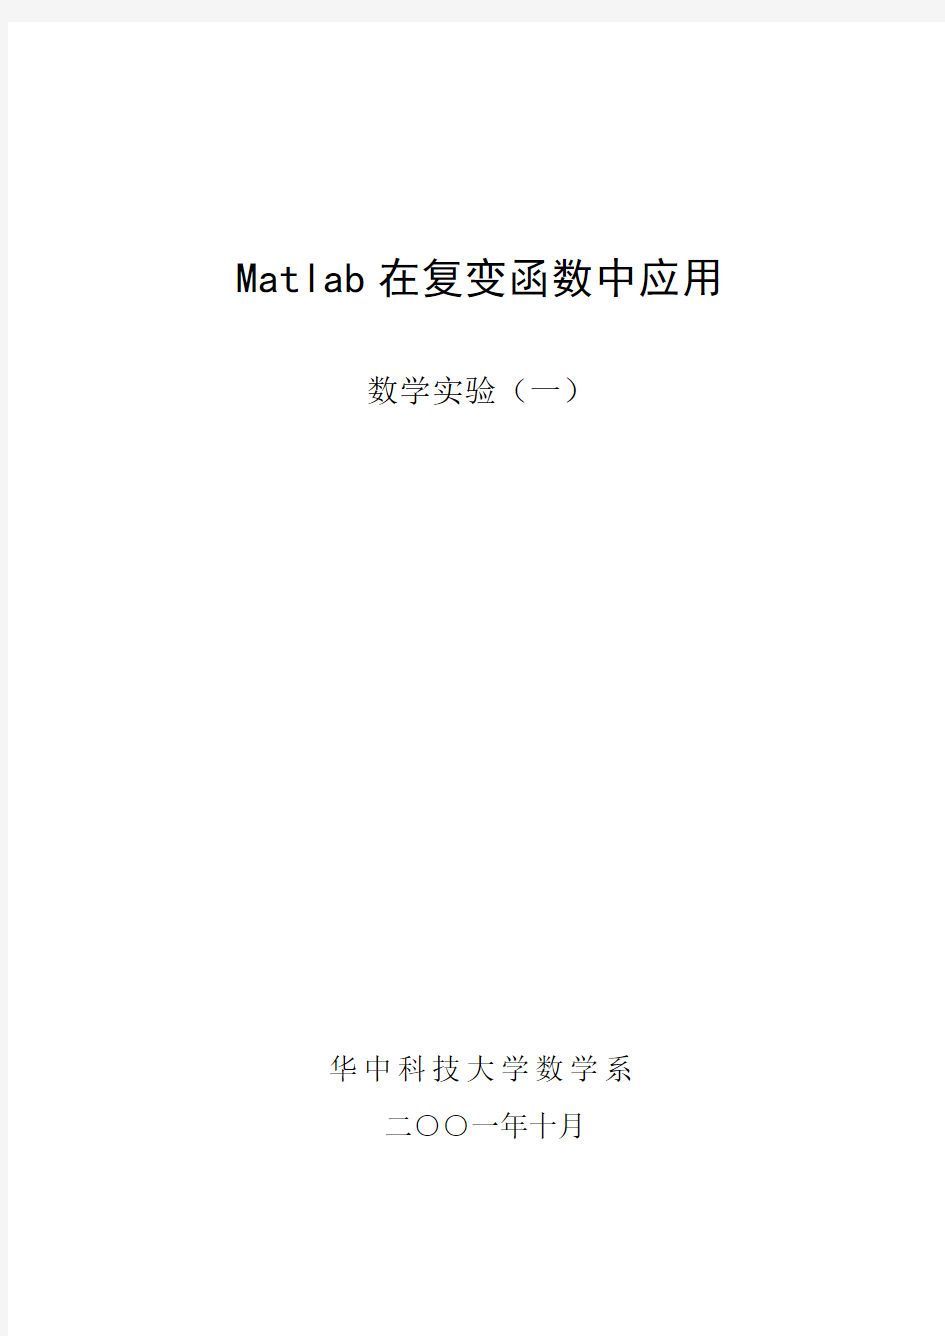 Matlab在复变函数中应用解读